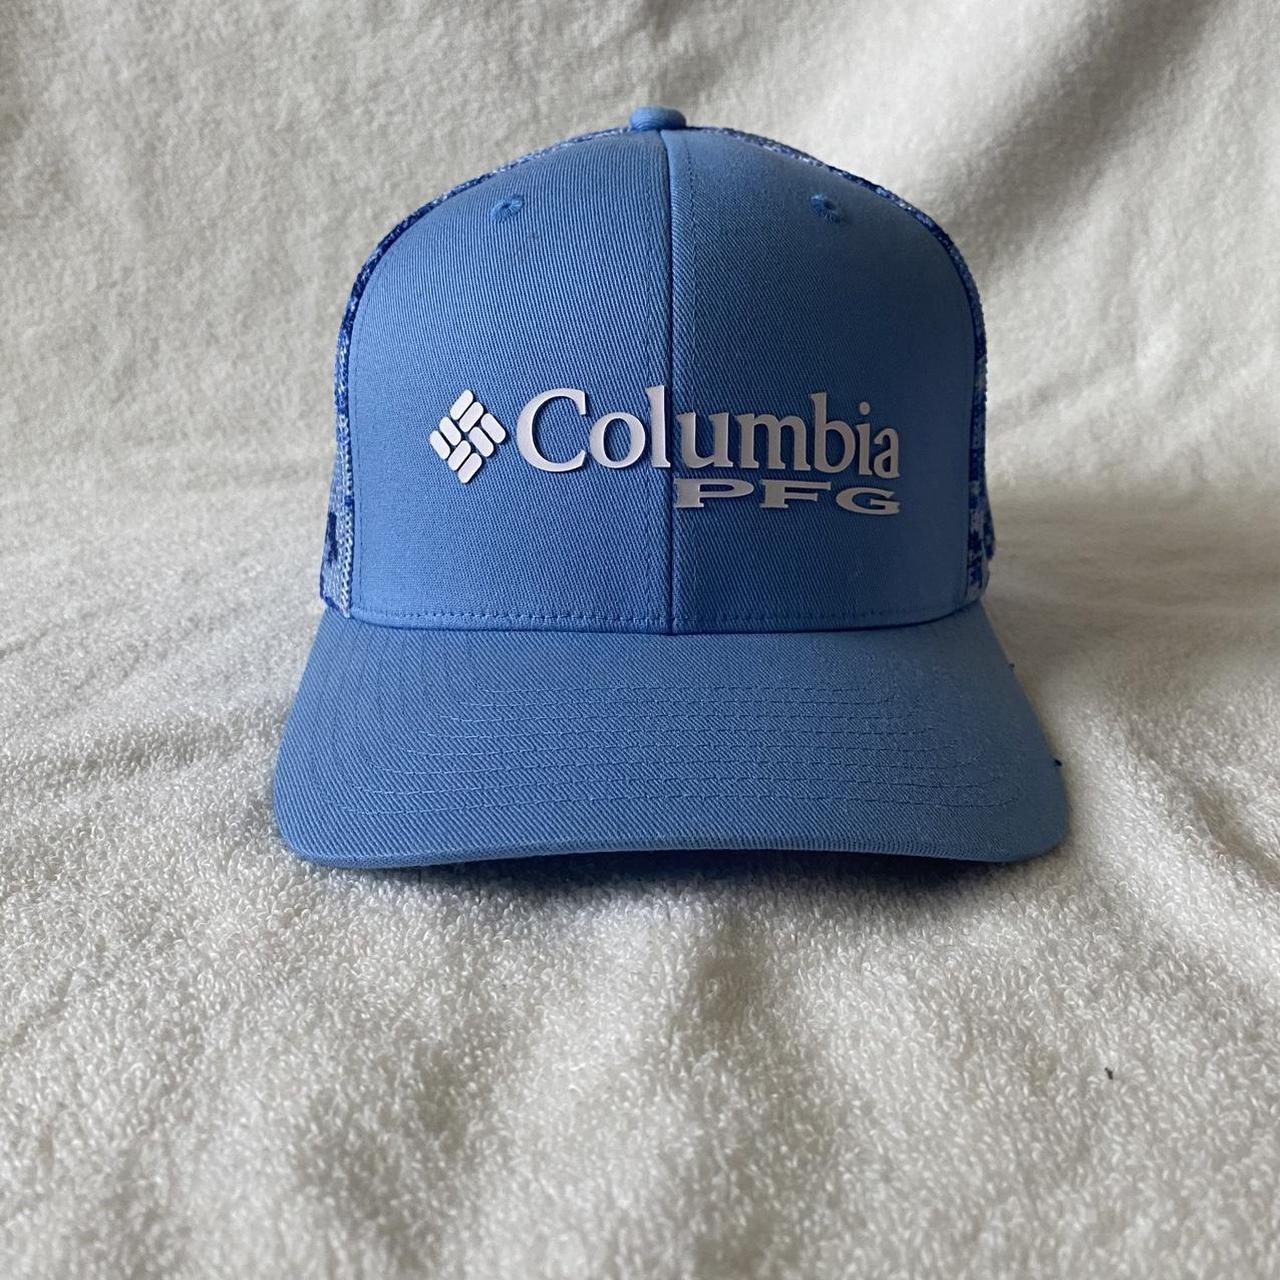 Columbia PFG fitted trucker hat - Depop